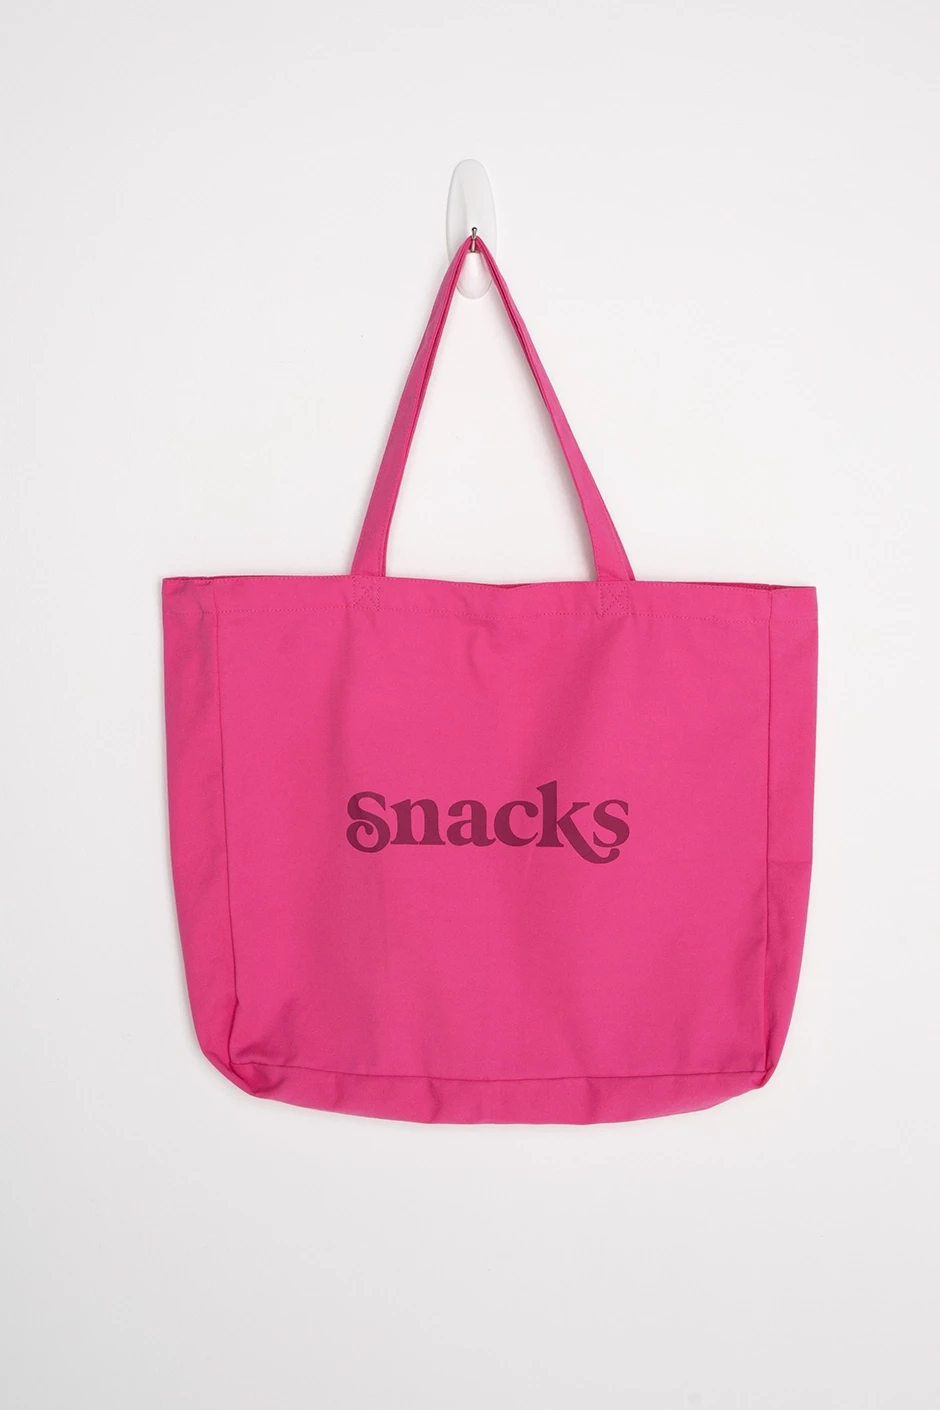 Snacks & Stuff Tote Bag 2